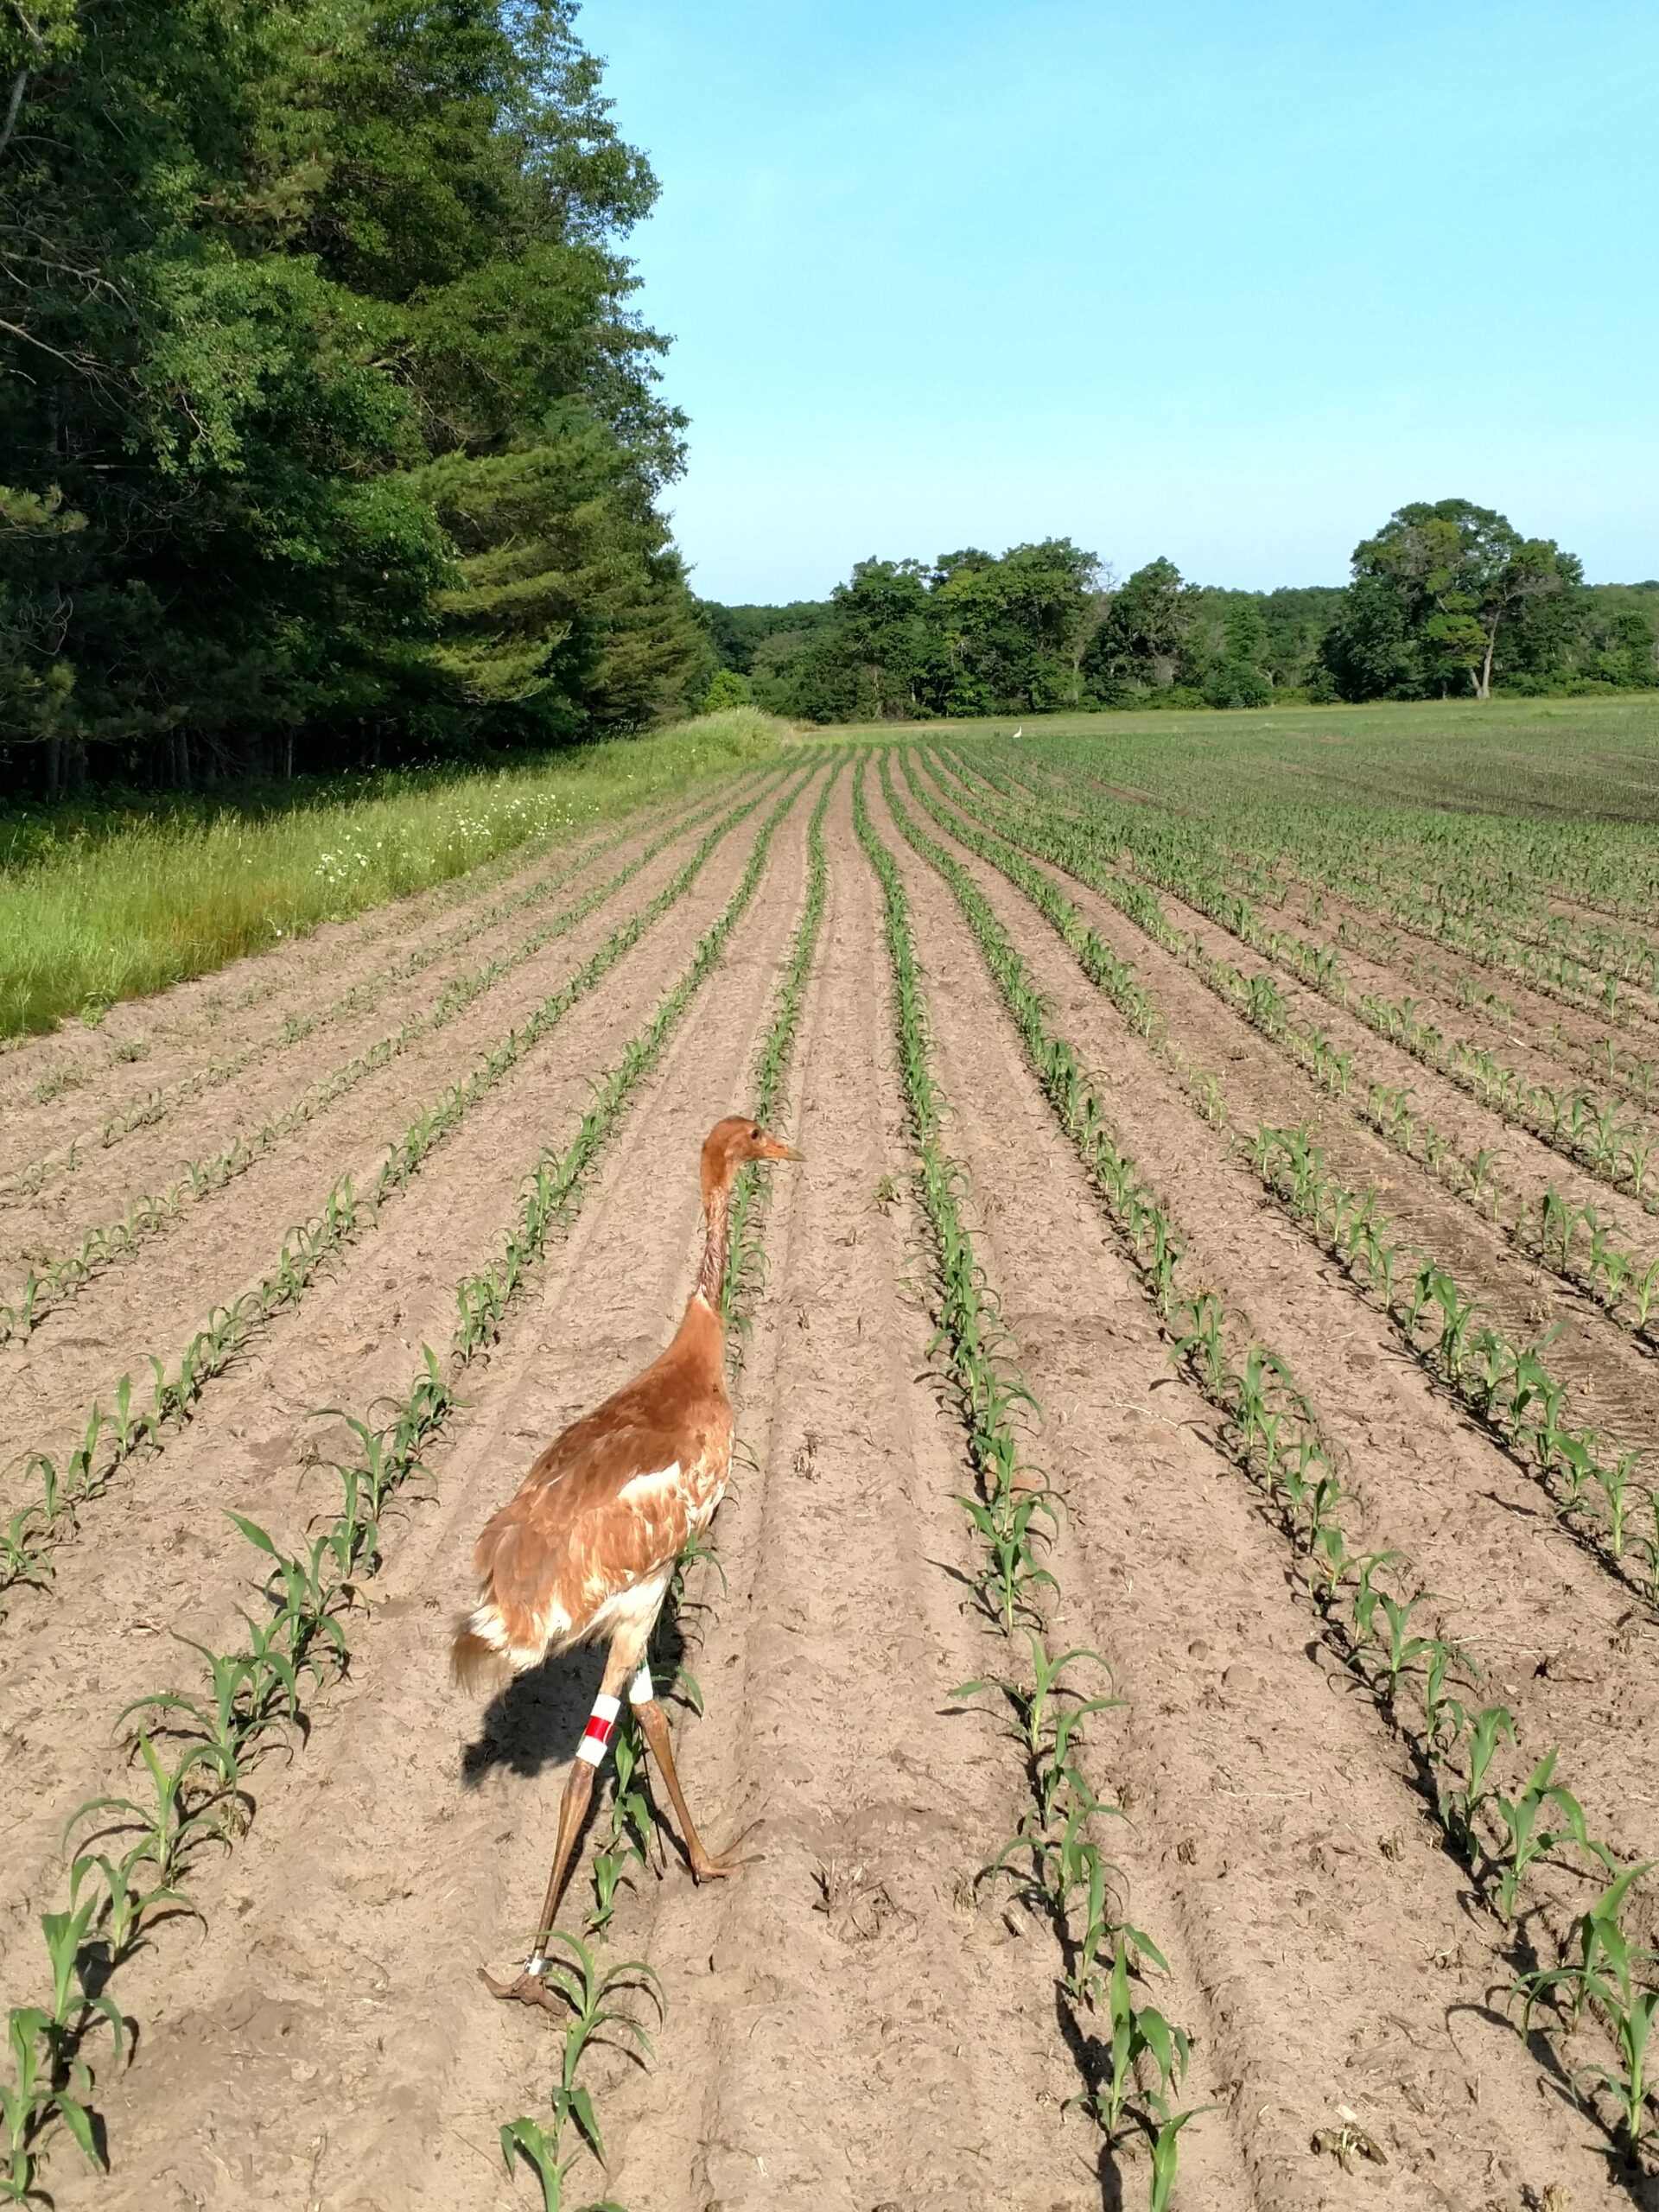 A Whooping Crane chick walks through a corn field